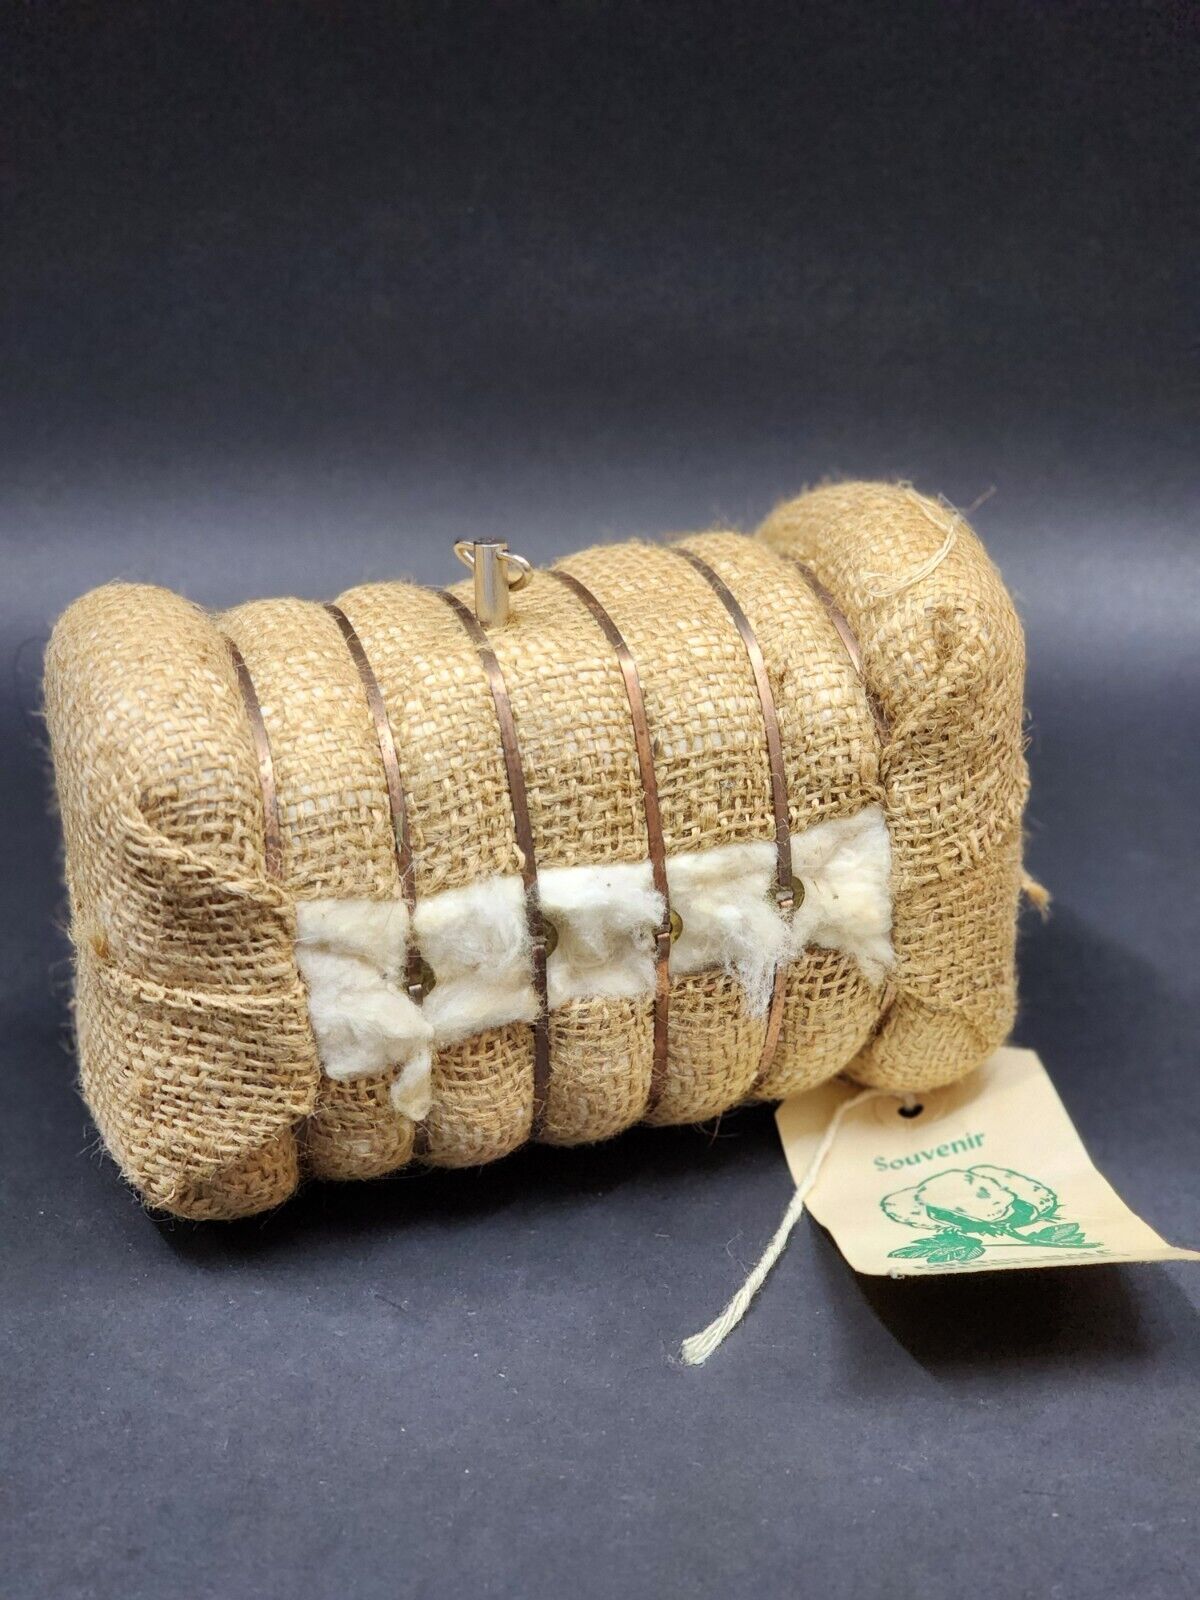 Souvenir of Arkansas Cotton Bales Pair Real Cotton Wrapped in Burlap